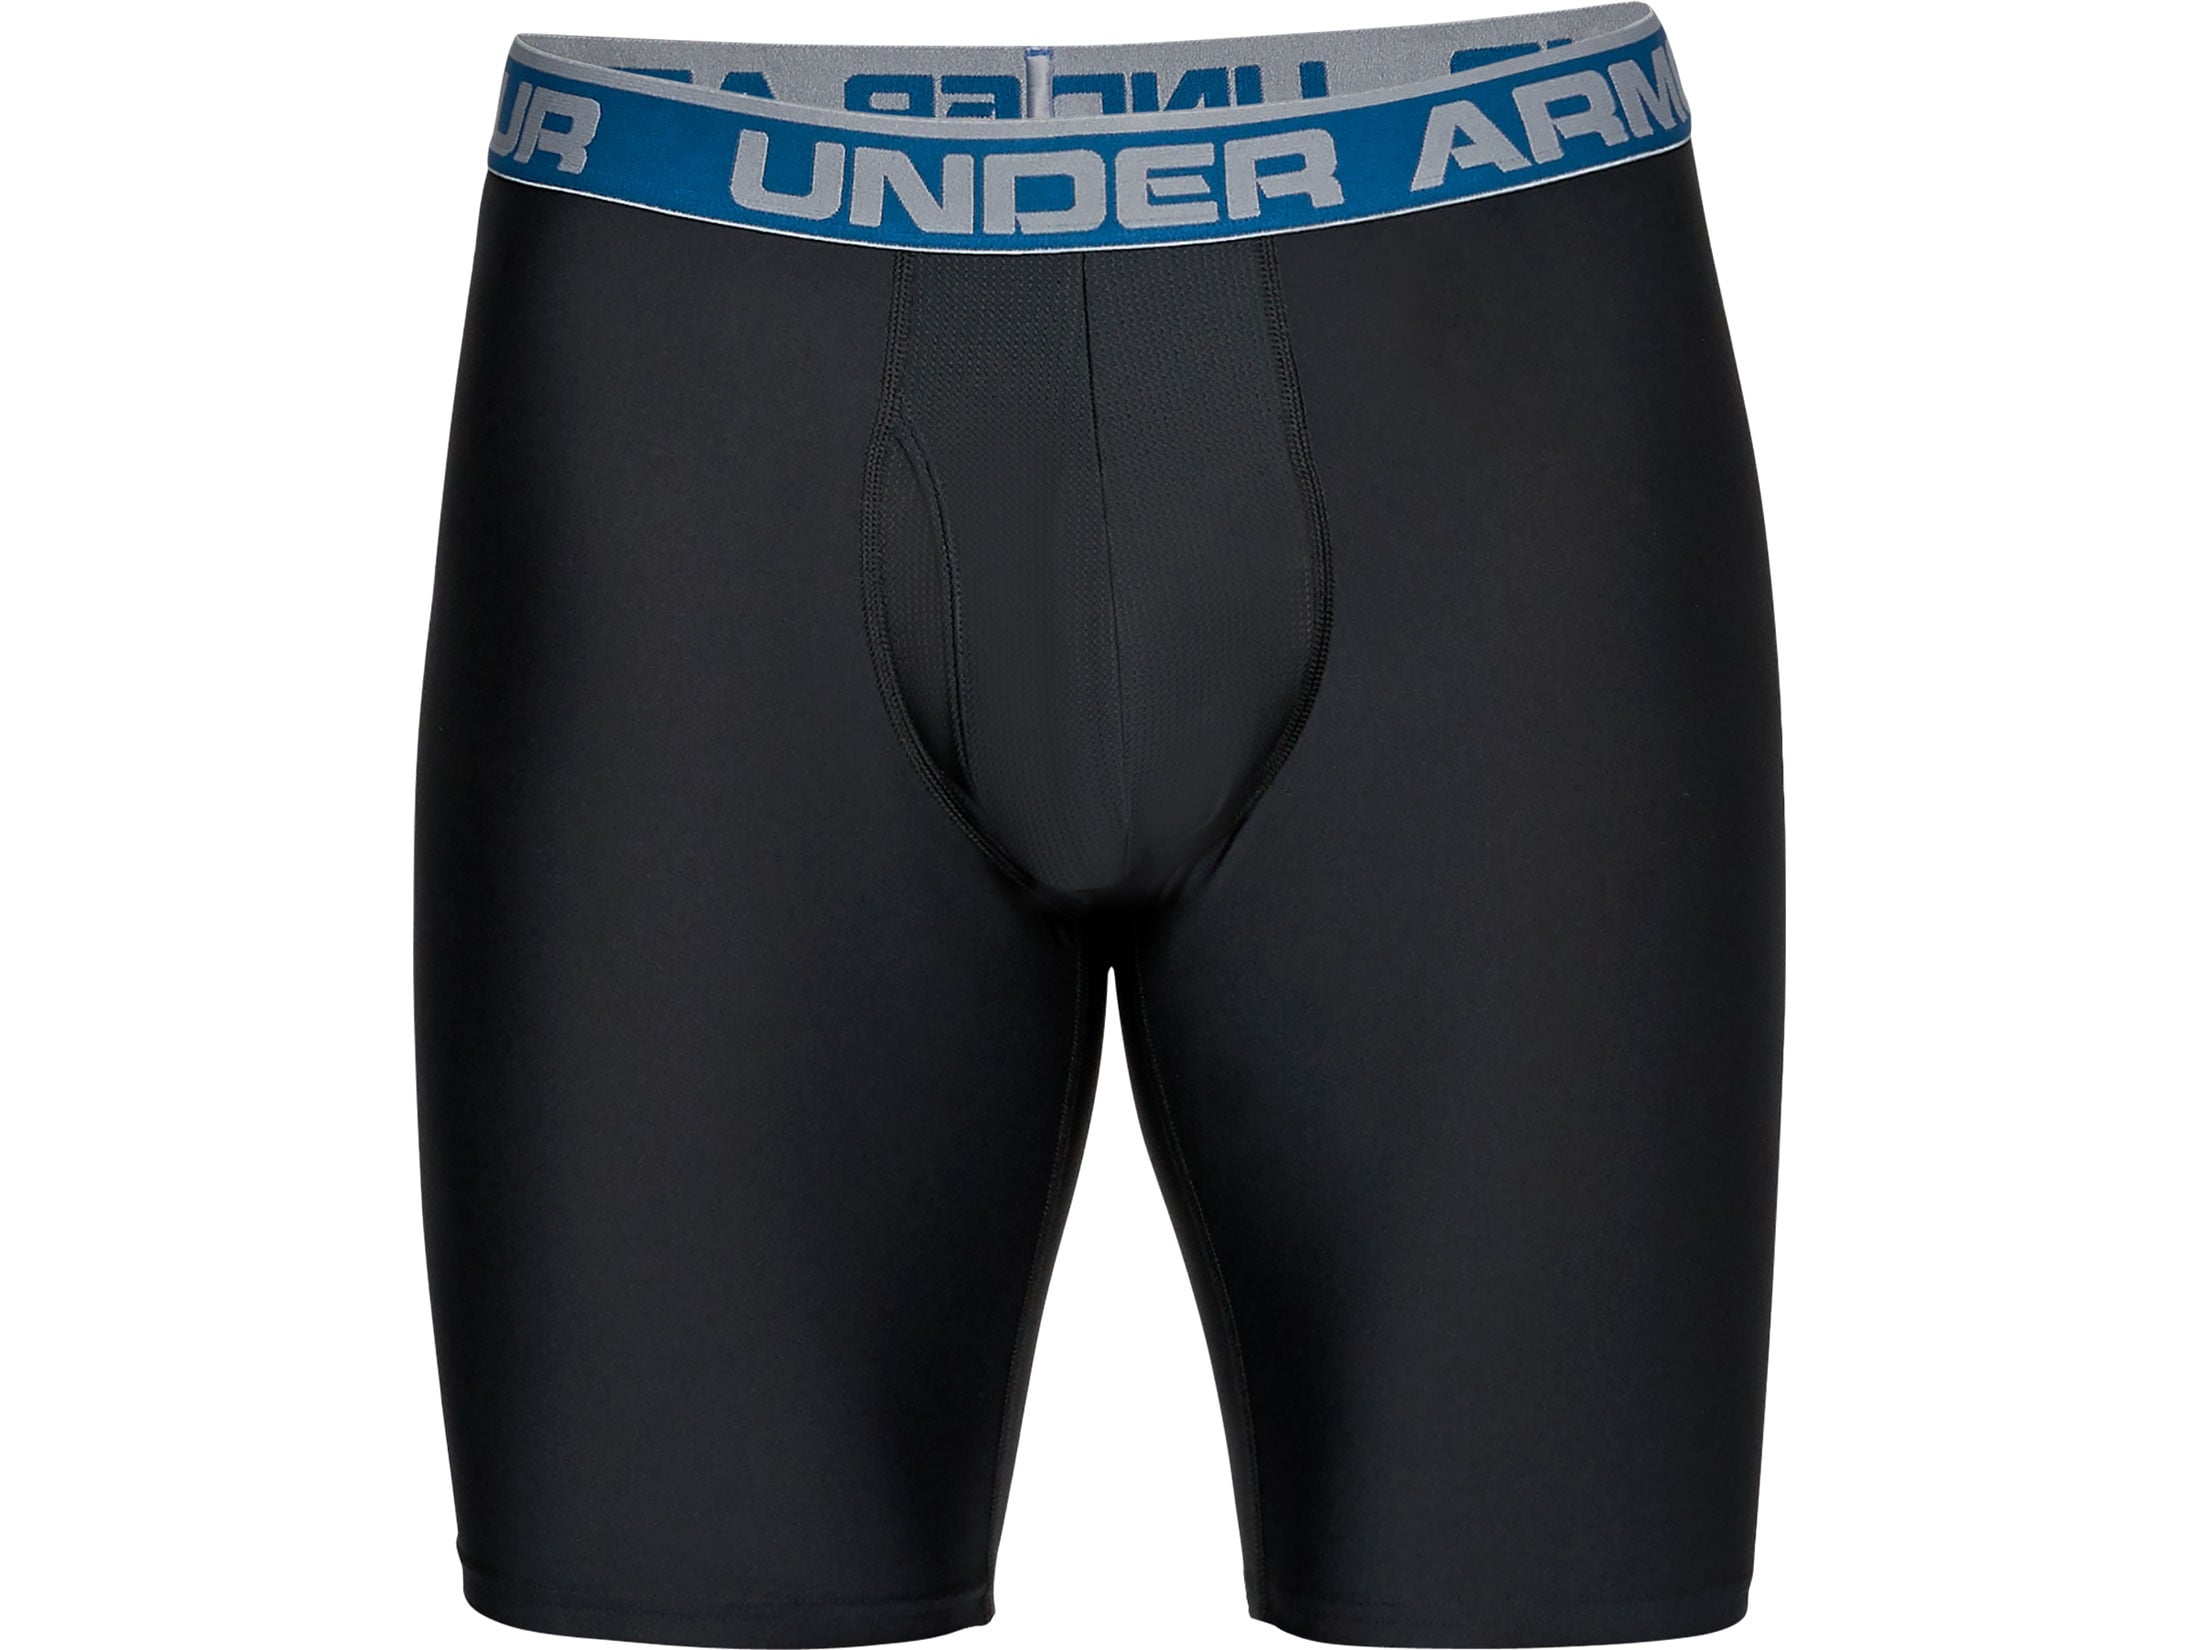 Under Armour Men's 9 Original Boxerjock Underwear Synthetic Blend